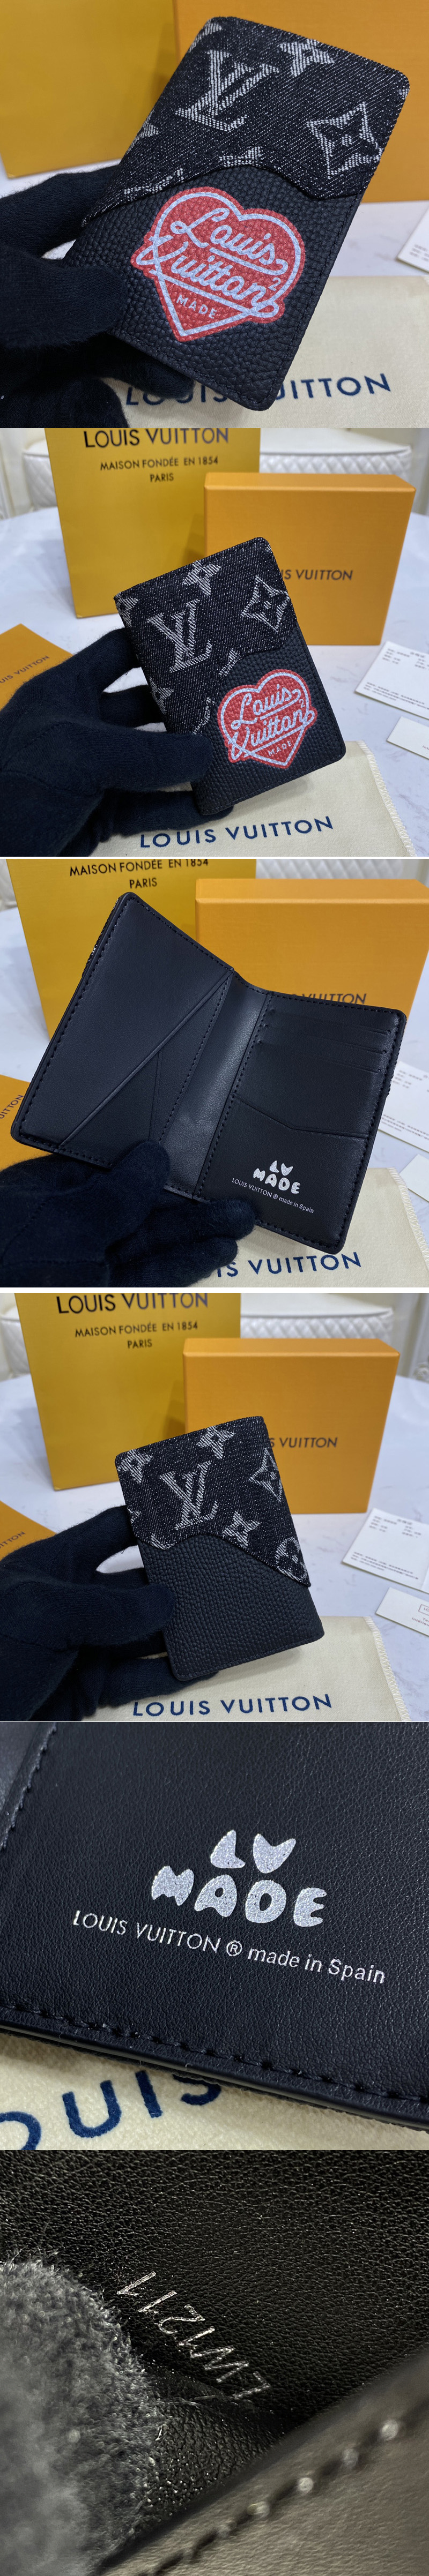 Louis Vuitton POCKET ORGANIZER Monogram 3.1 x 4.3 x 0.4 inches M60502